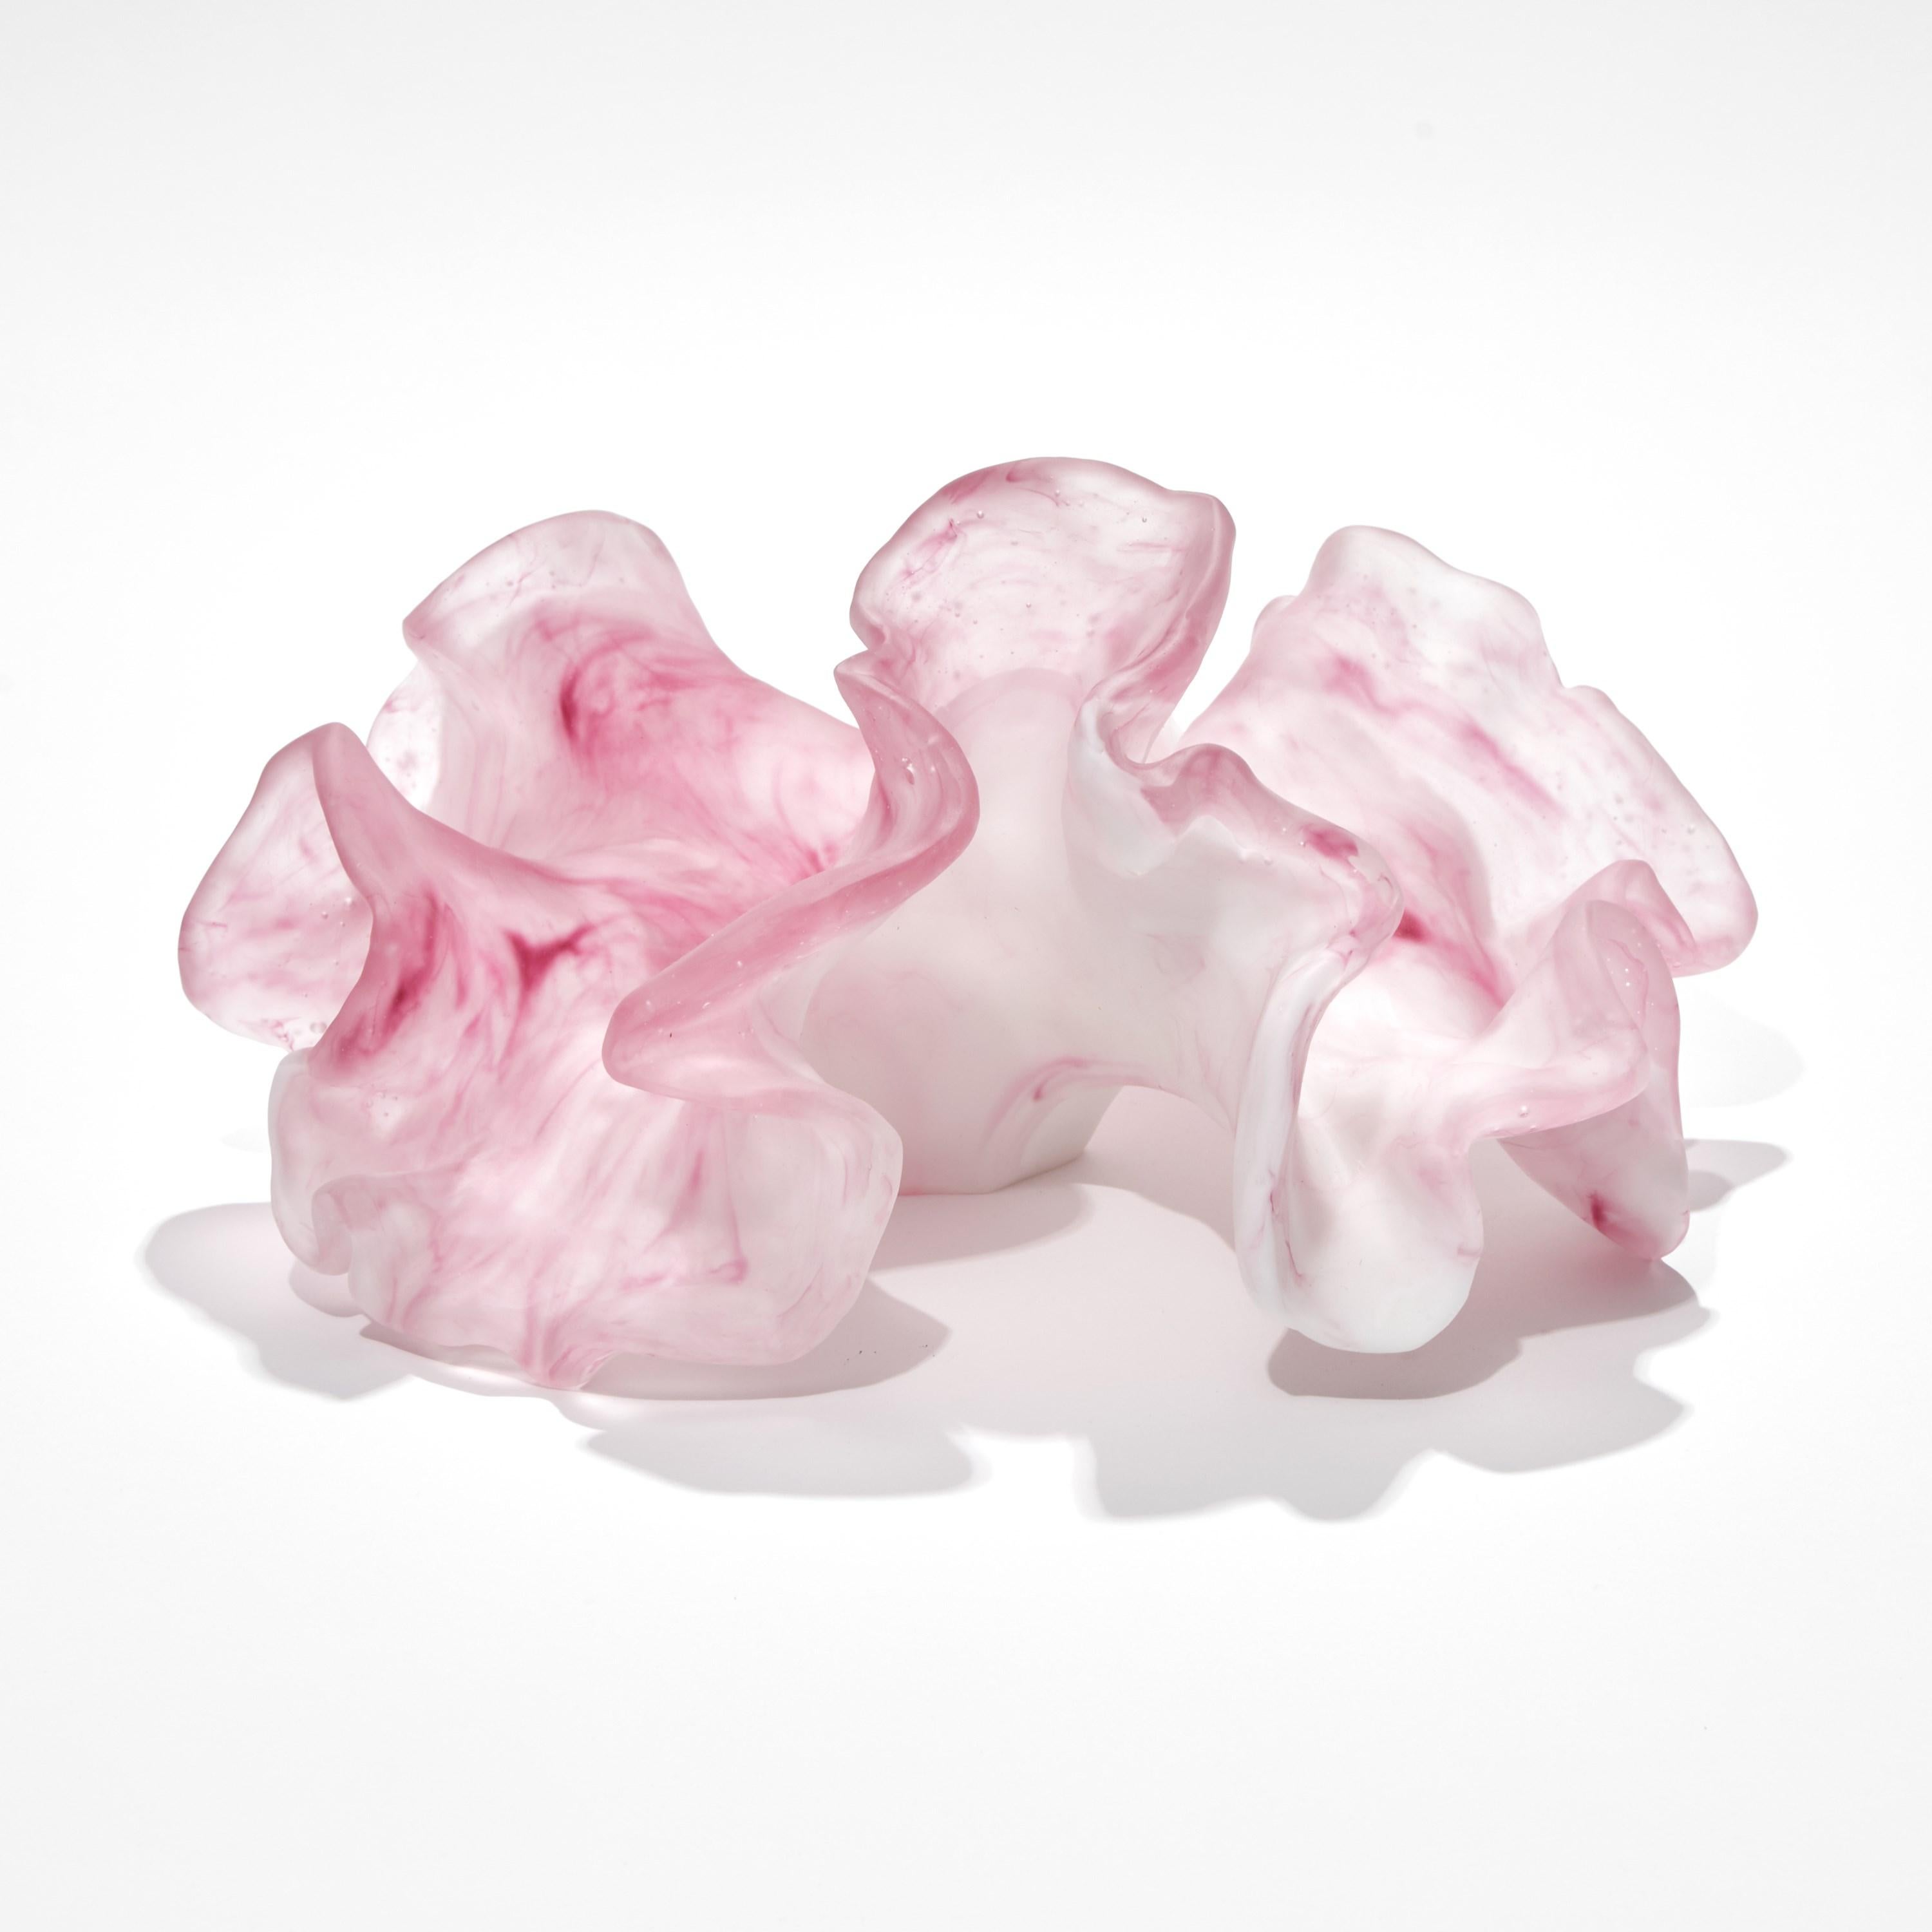 Organic Modern Unfolded Change, Unique Pink & White Cast Glass Sculpture by Monette Larsen For Sale